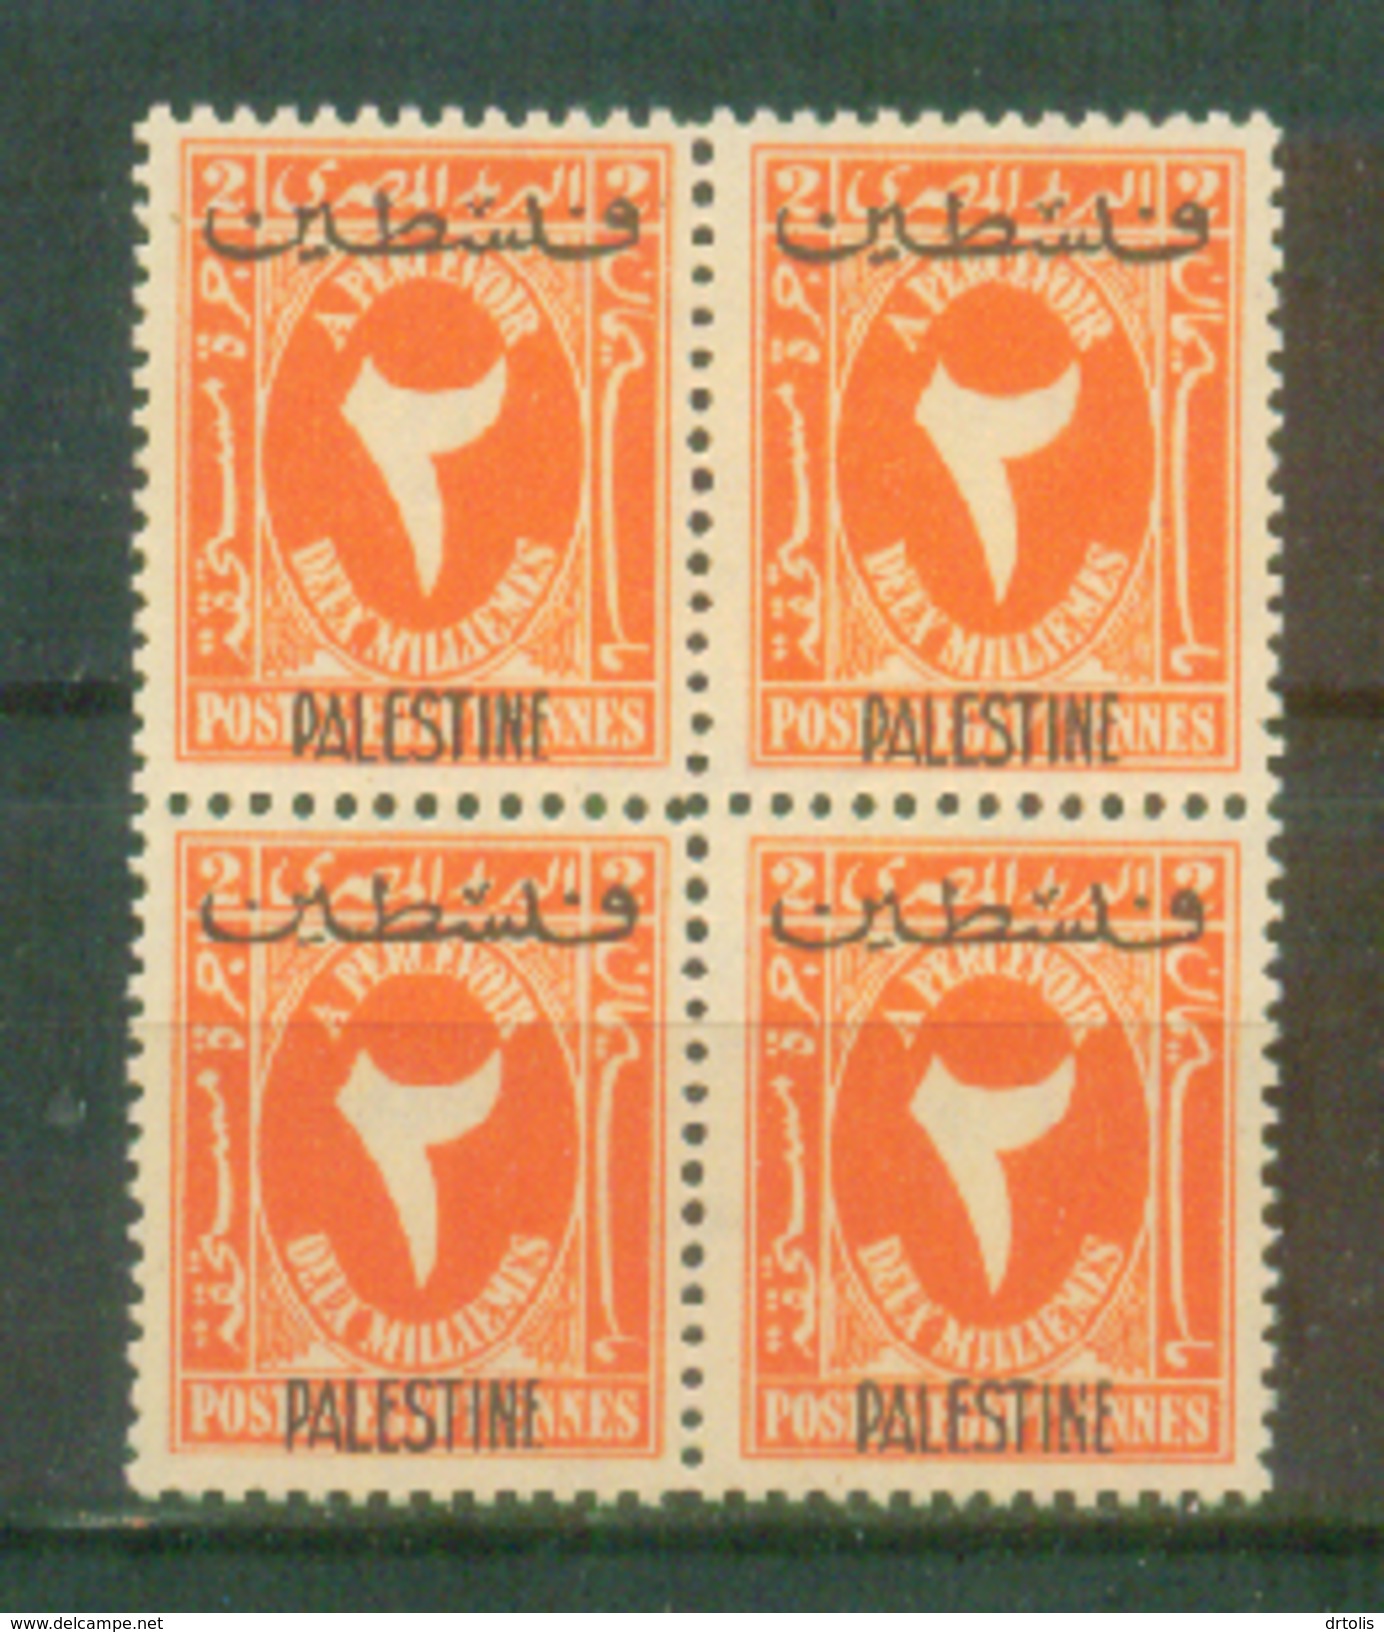 EGYPT / 1948 / PALESTINE / GAZA / POSTAGE DUE / MNH - Unused Stamps